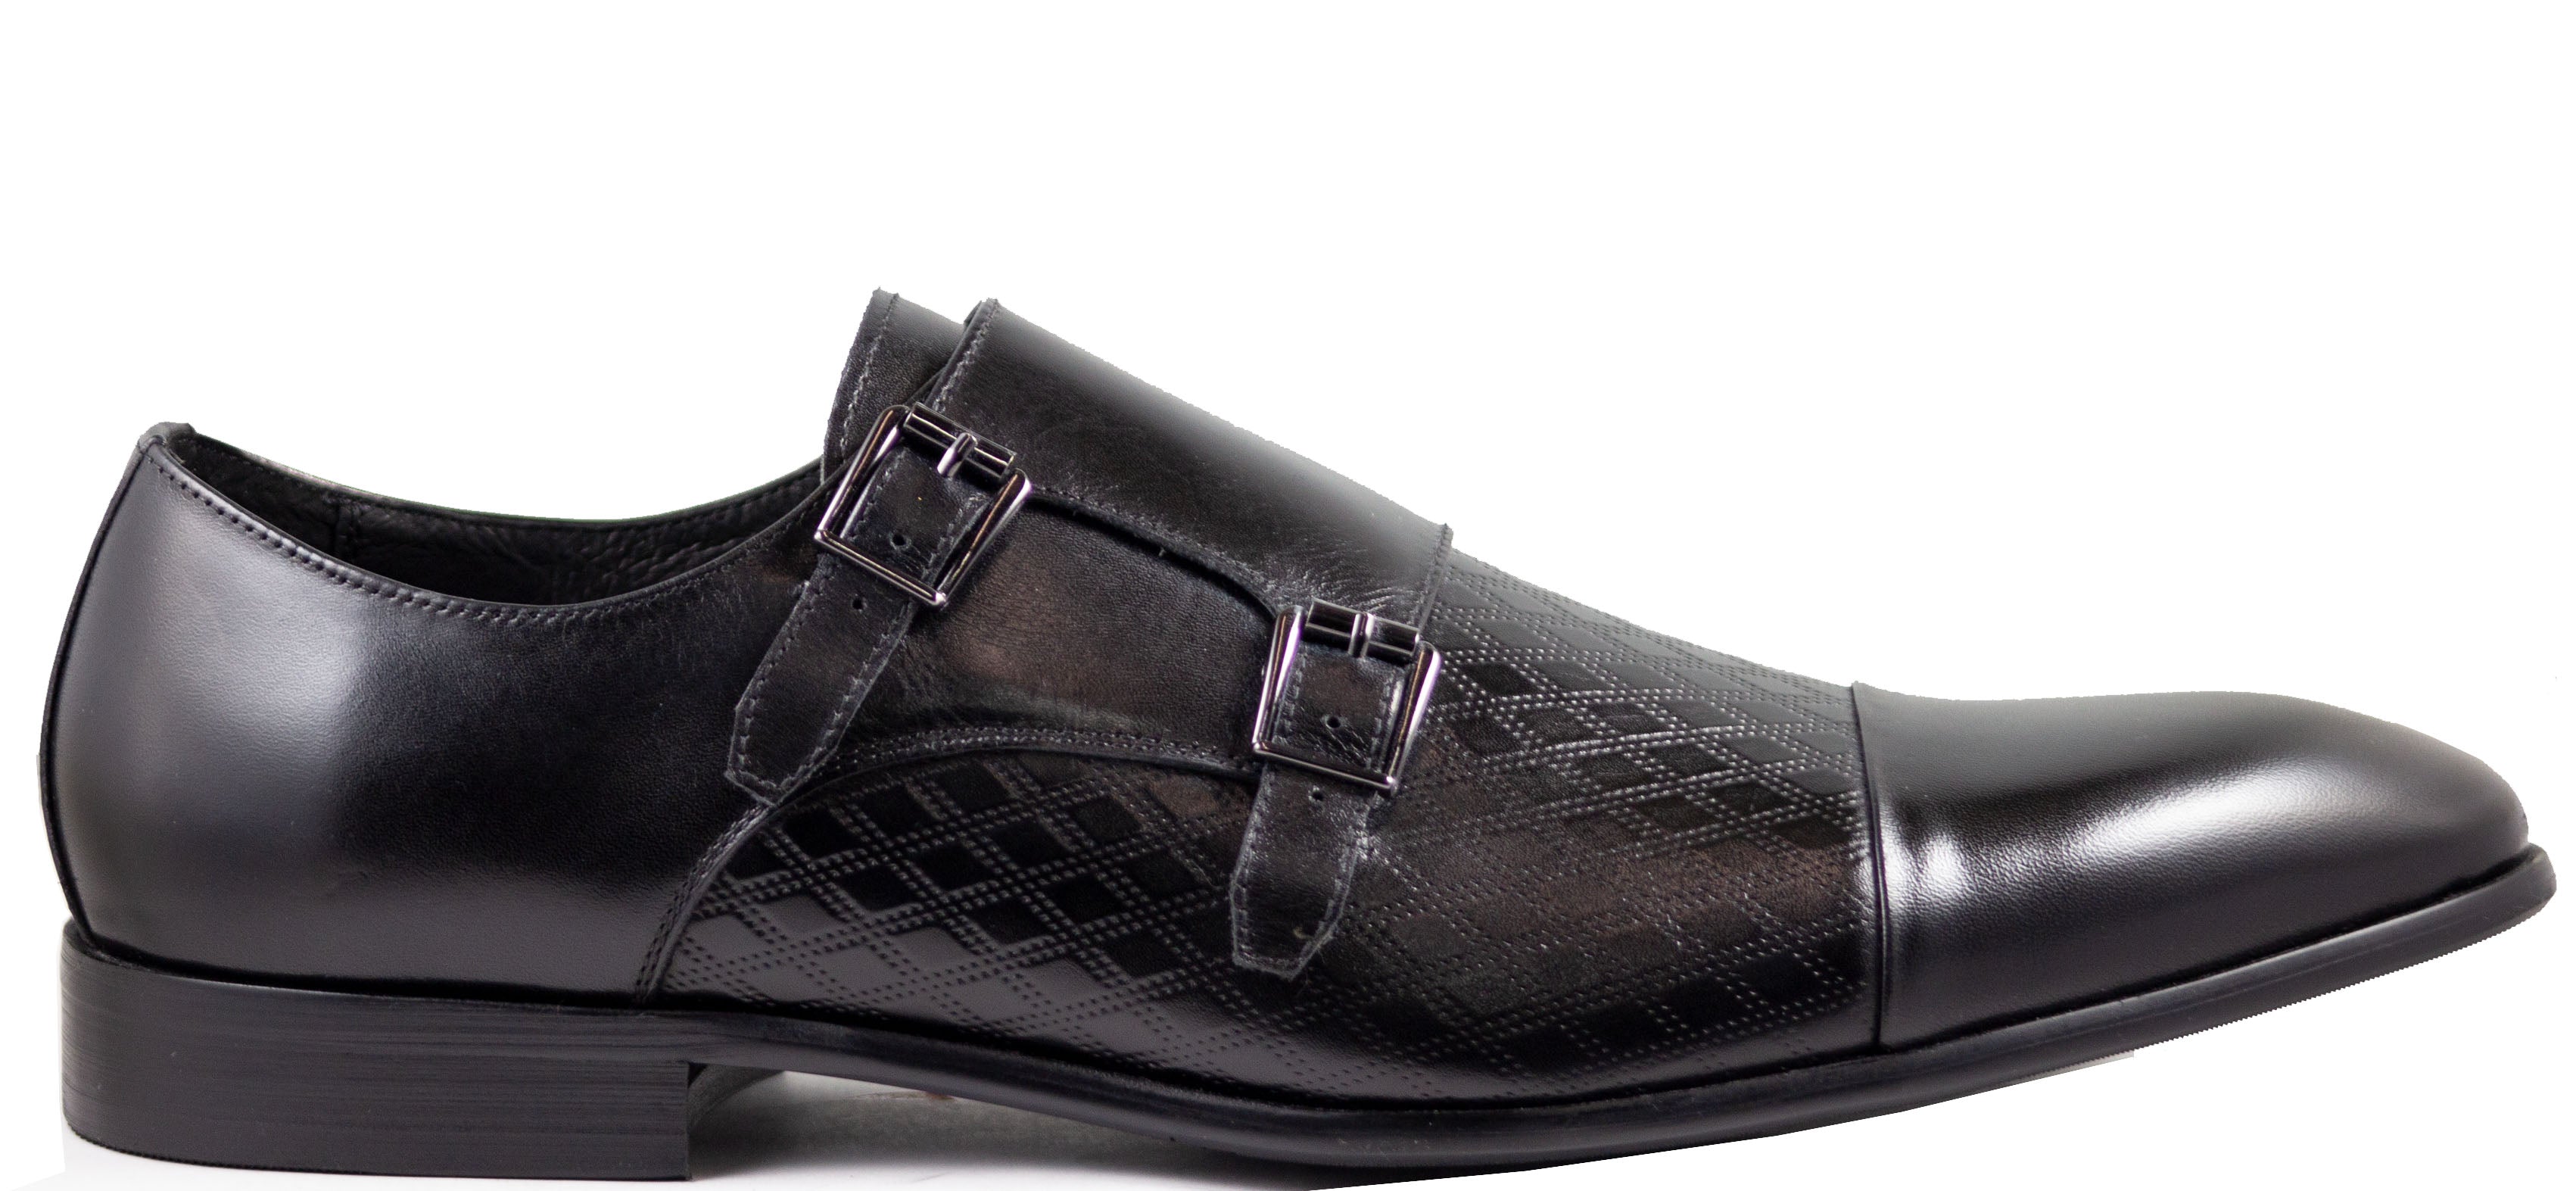 Mario Samello  Men's  Double Monk Strap Dress Shoes  3103  HA15564-2